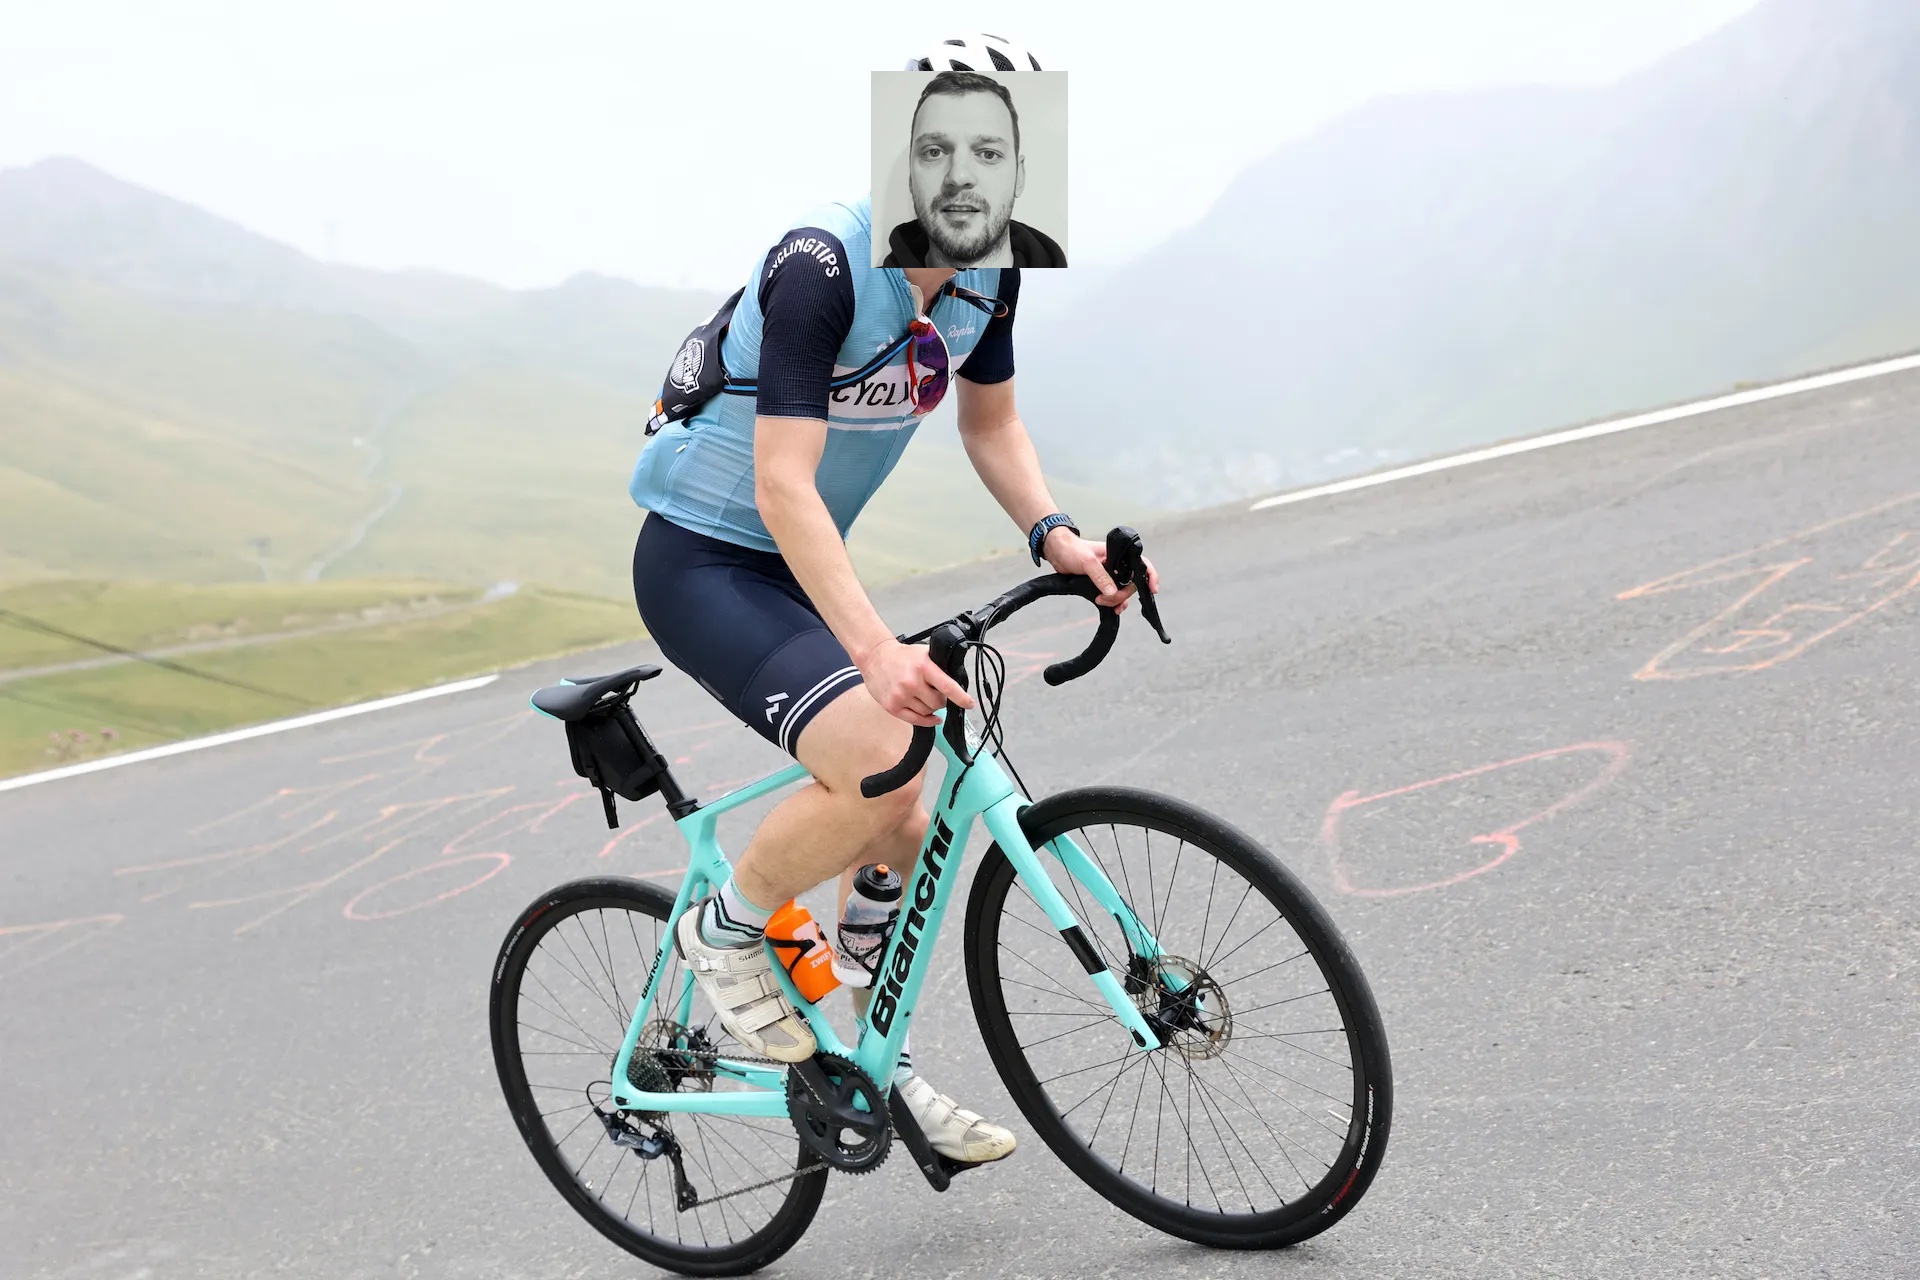 Matt de Neef rides the Col du Tourmalet. Matt de Neef's profile photo is poorly superimposed over Matt de Neef (the cyclist's) face, for a very meta bad Photoshop experience.